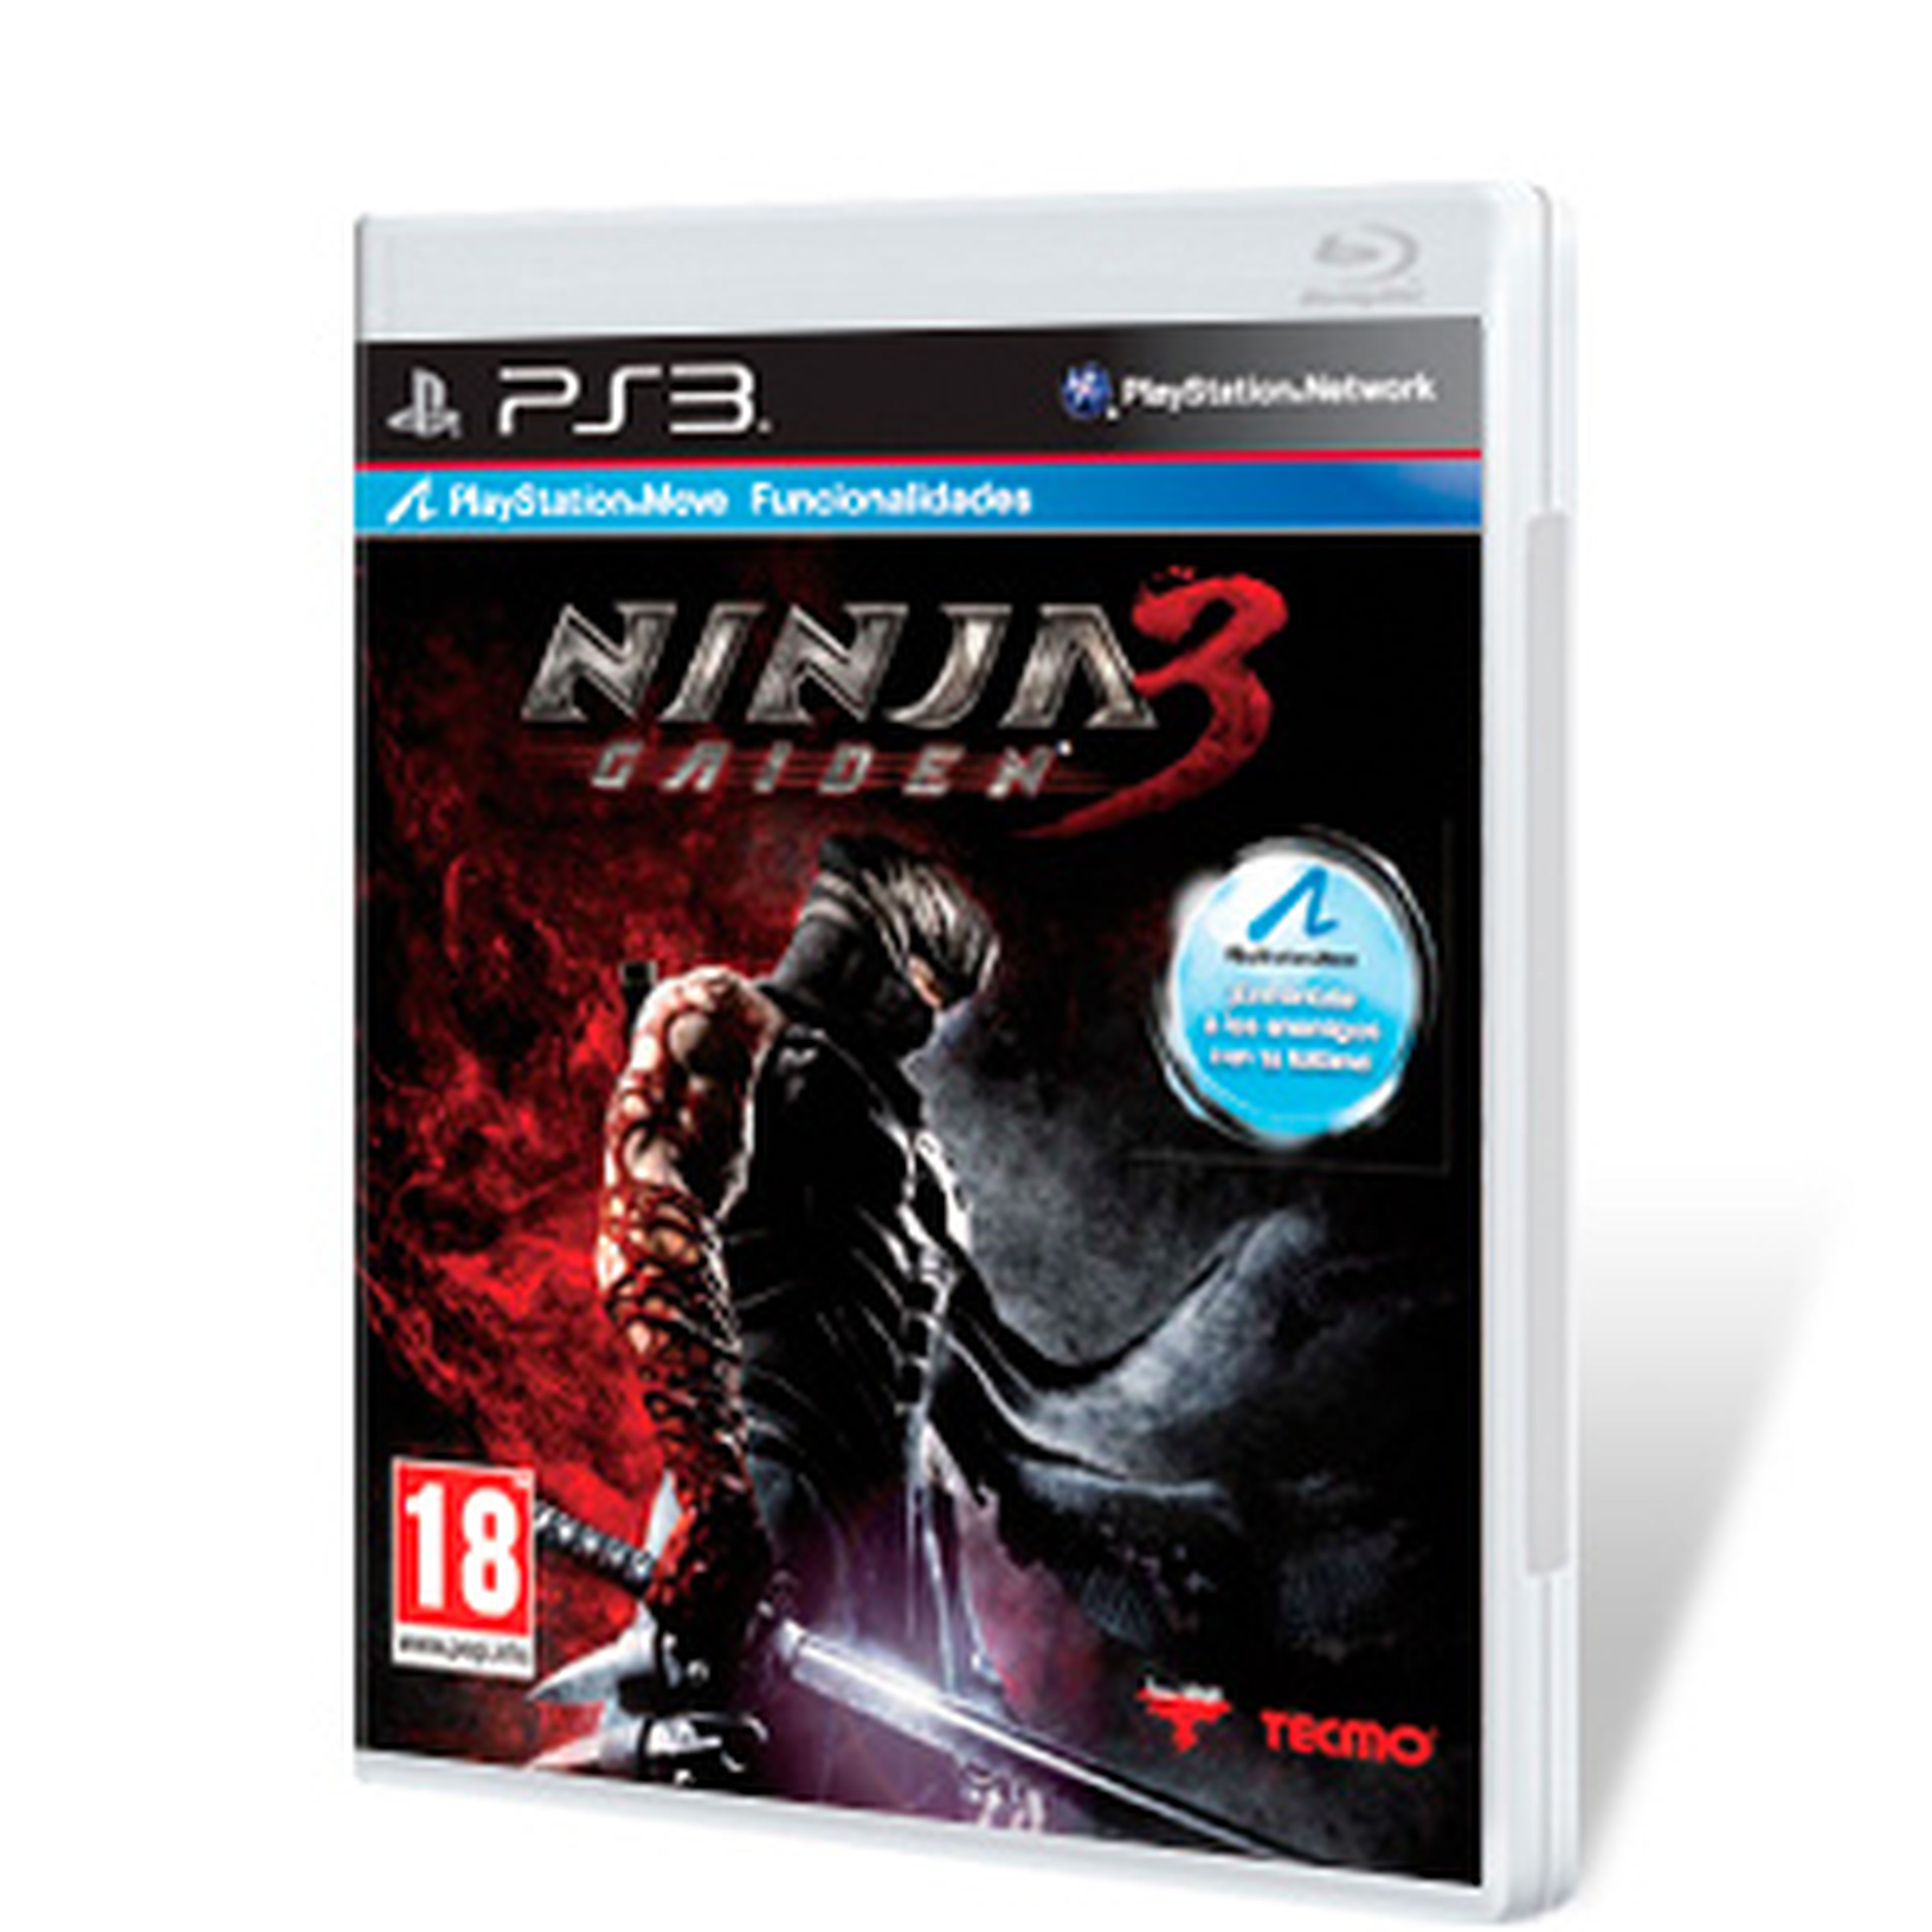 Ninja Gaiden 3 para PS3